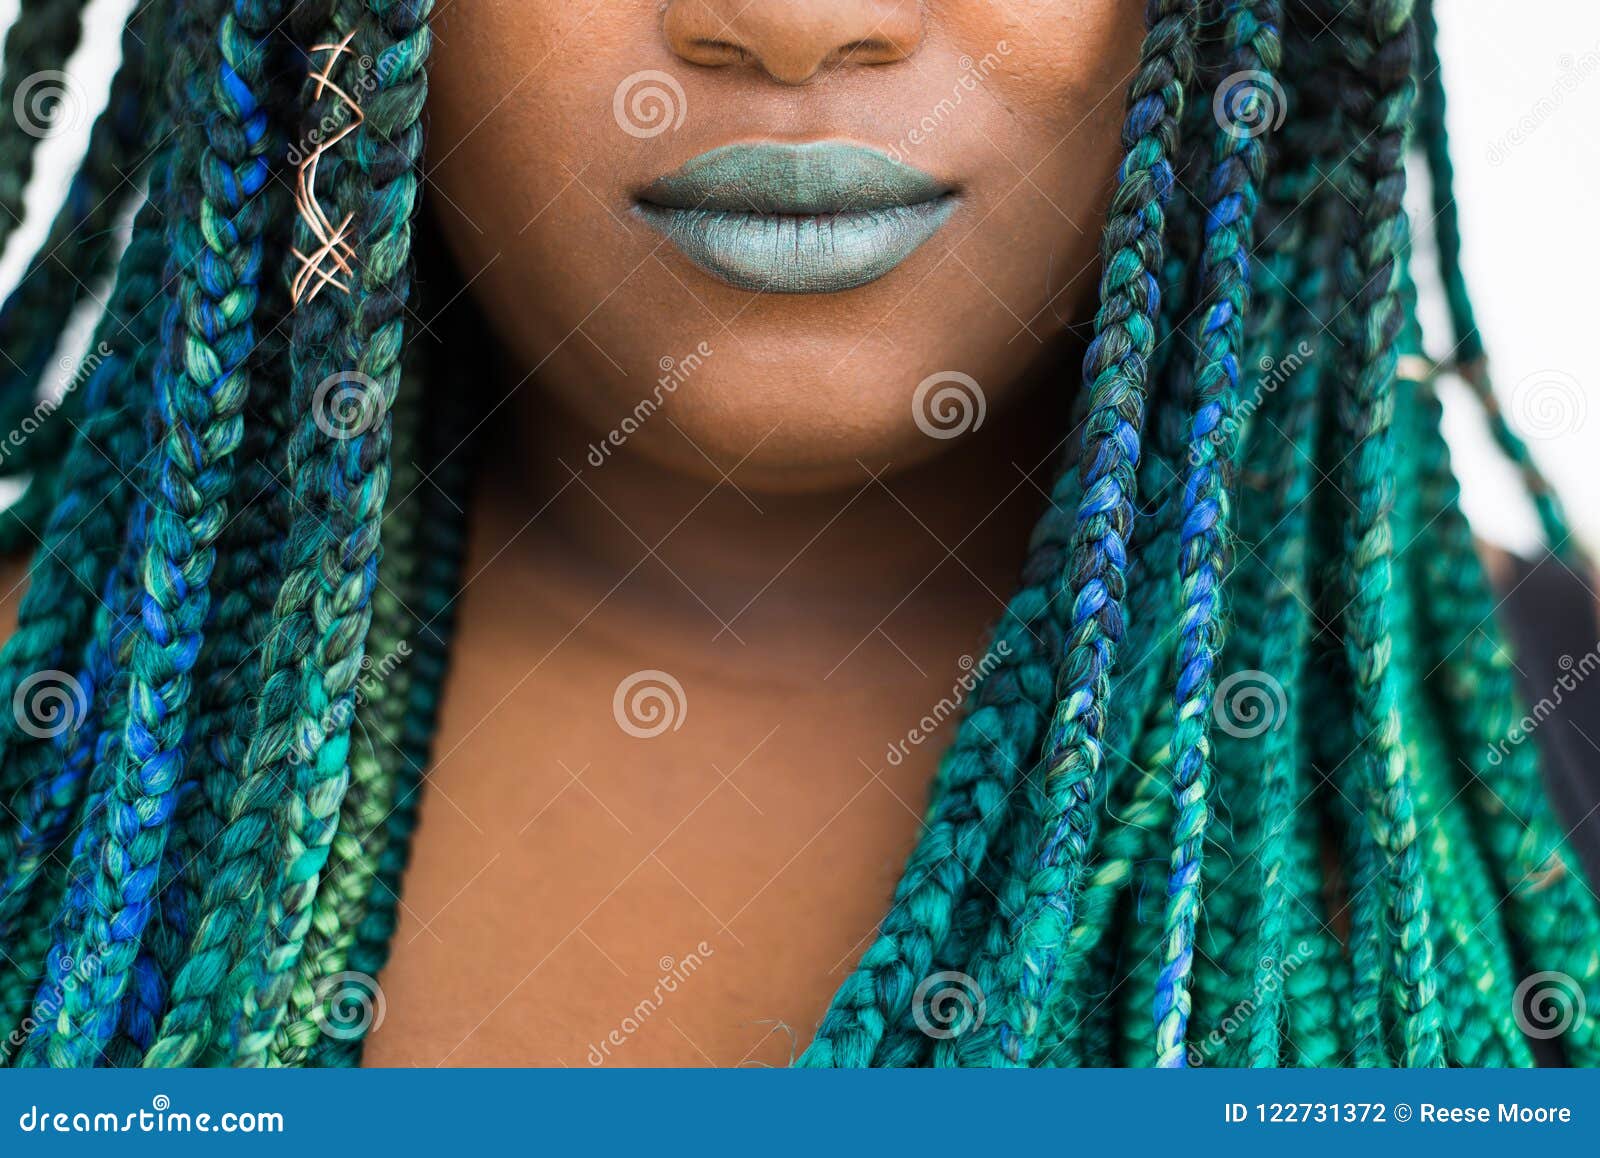 Blue and Green Hair Split Braids - wide 1